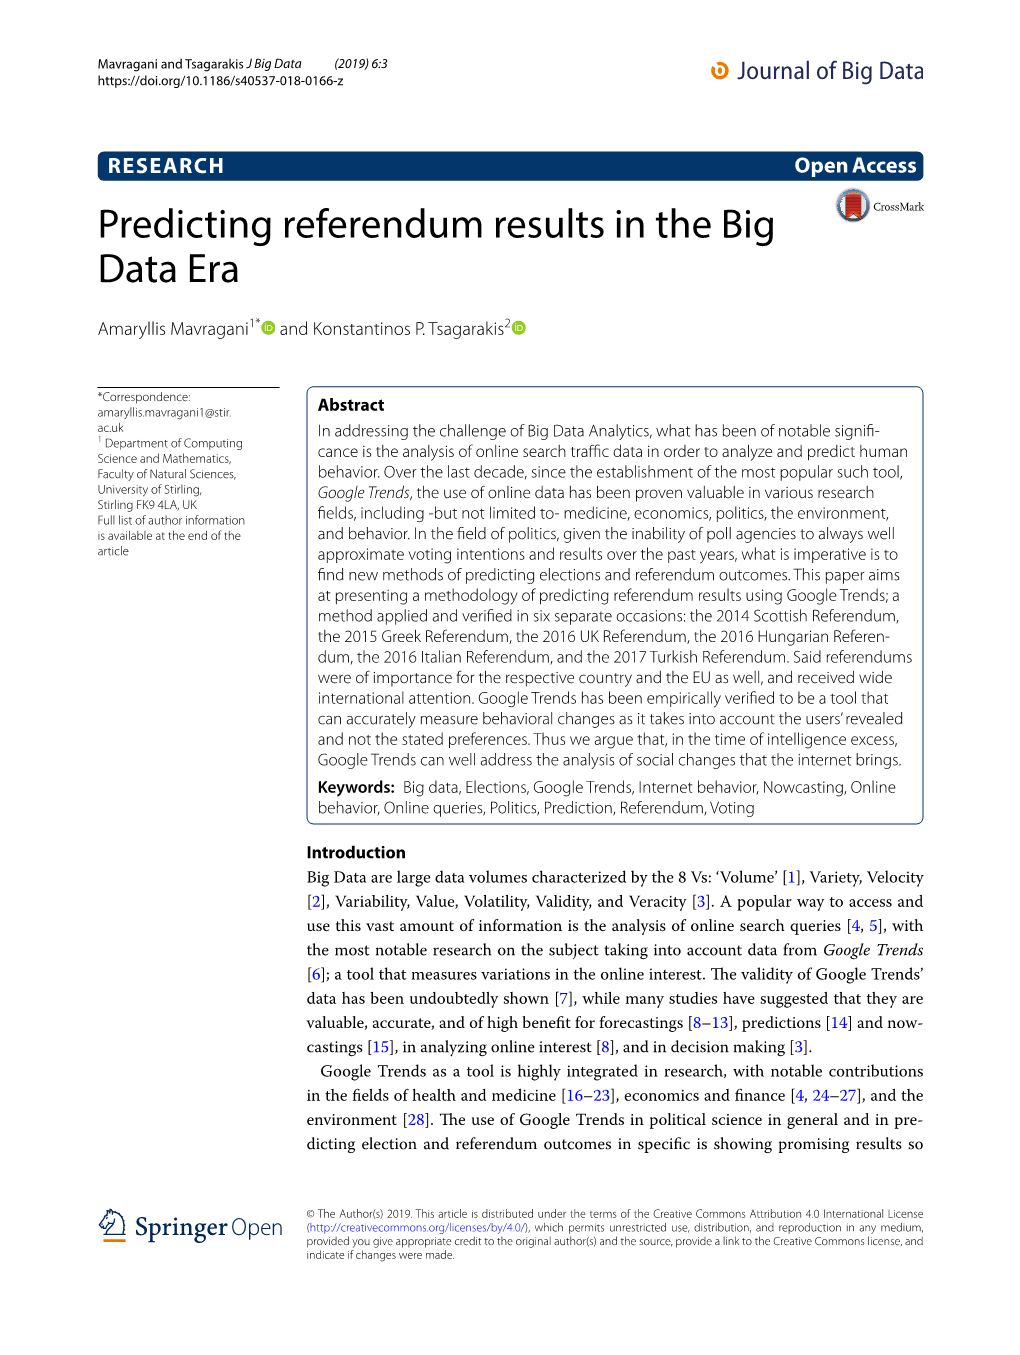 Predicting Referendum Results in the Big Data Era